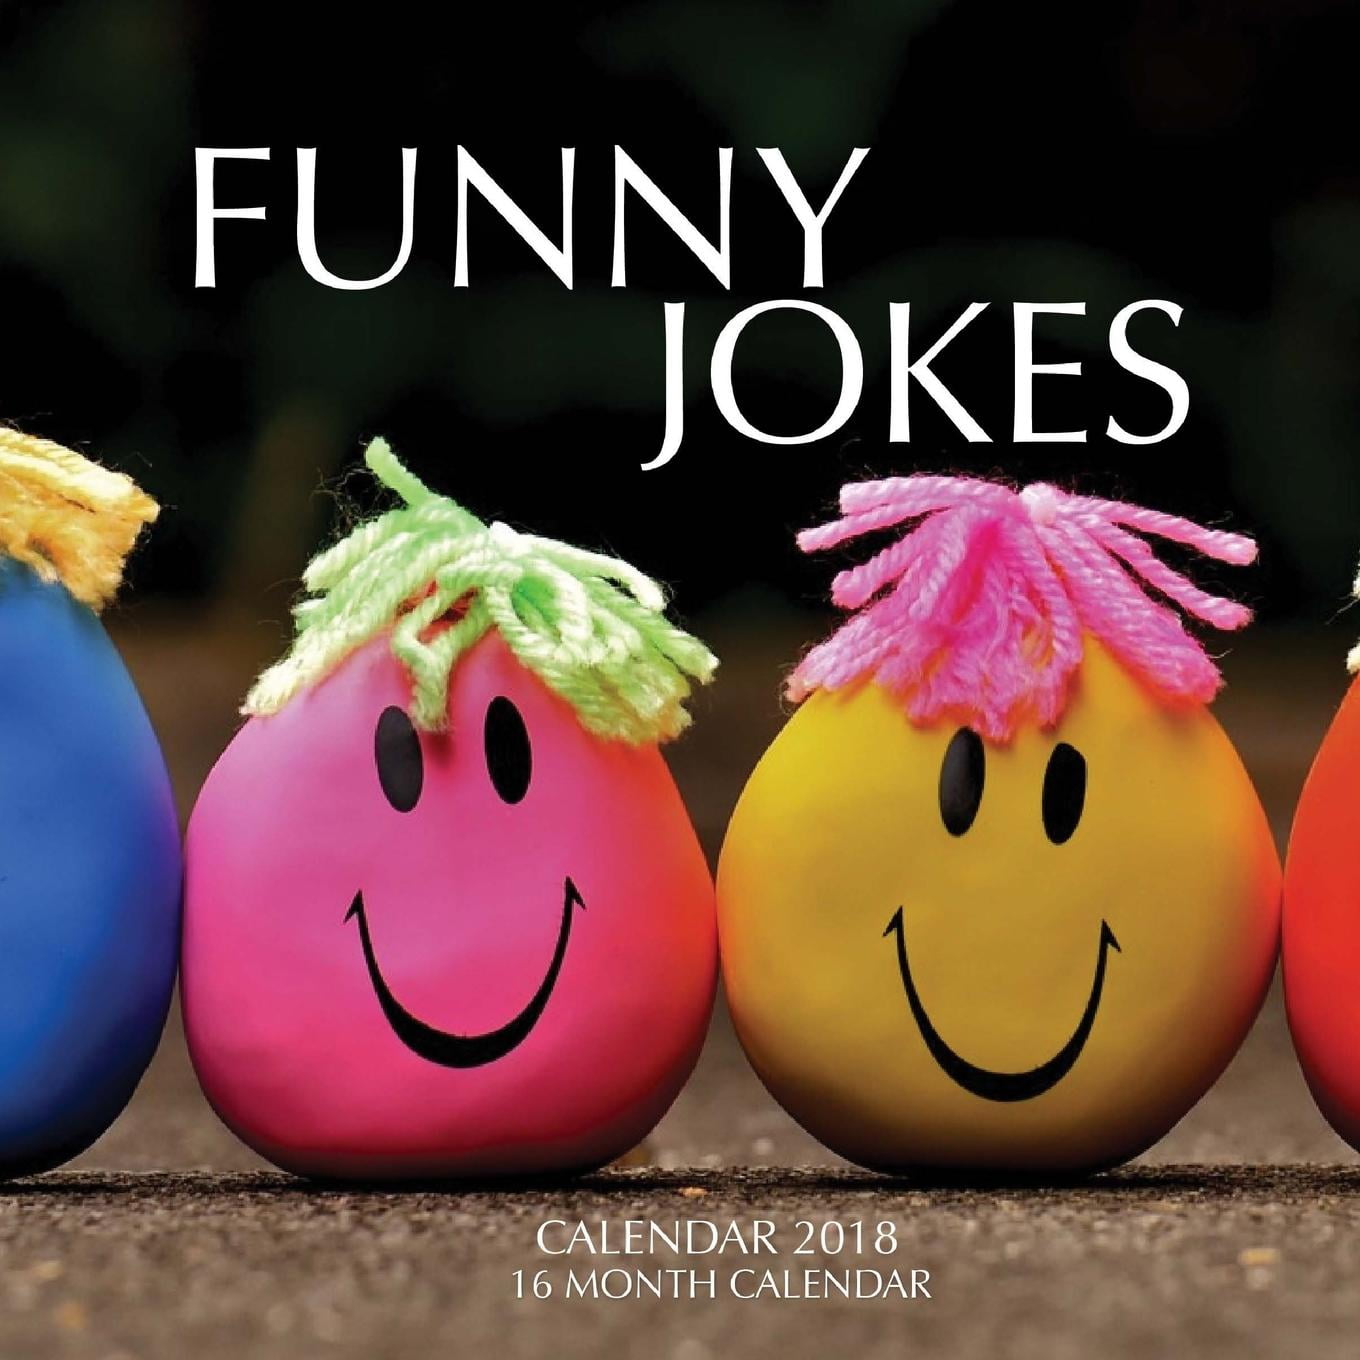 Funny Jokes Calendar 2018: 16 Month Calendar (Paperback) - Walmart.com